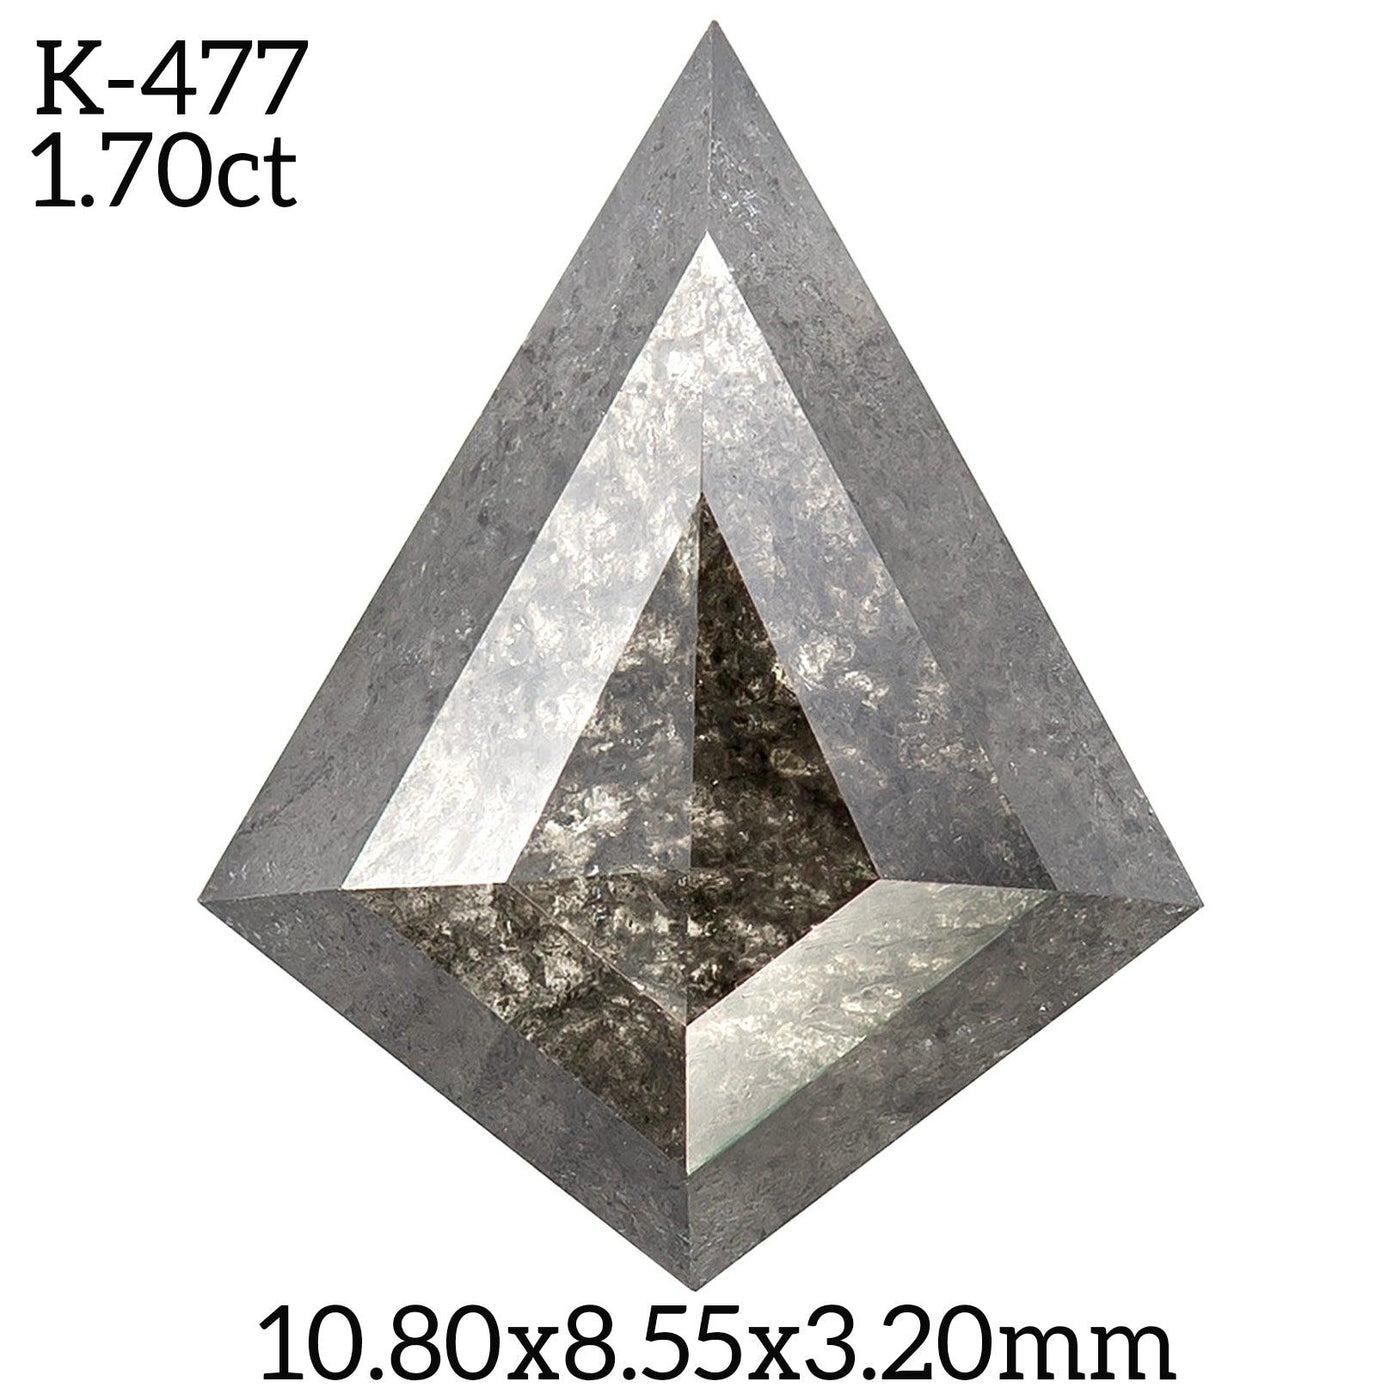 K477 - Salt and pepper kite diamond - Rubysta